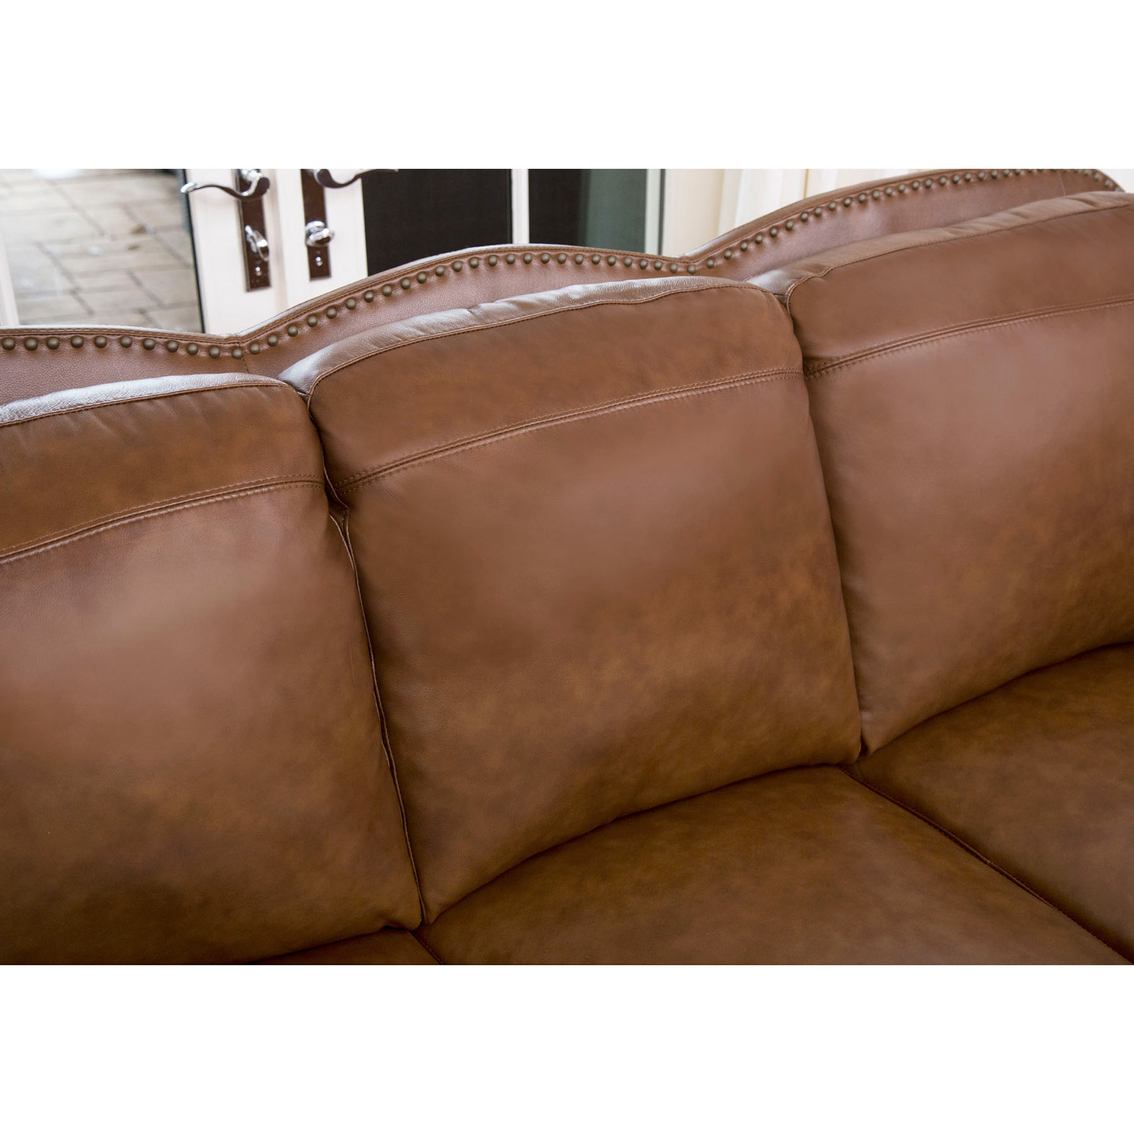 Abbyson Tuscany Leather Sofa - Image 4 of 5